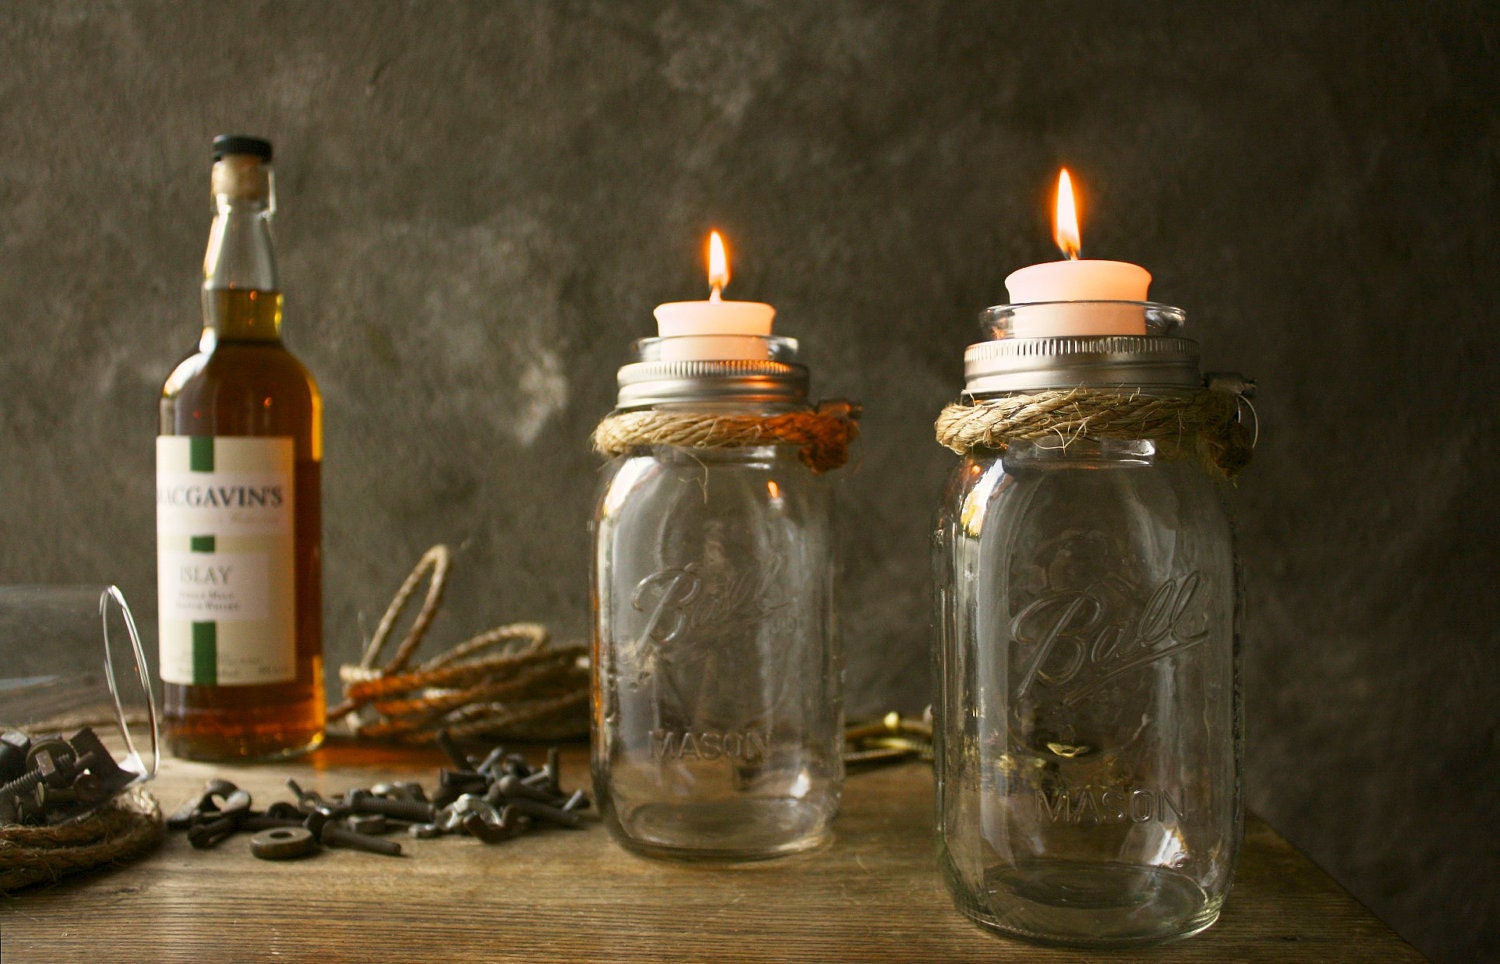 Pair of Mason Jar Candle Holders Rustic Wedding Decor Glass Lighting Shabby Chic Lighting - Rustic Rope Design